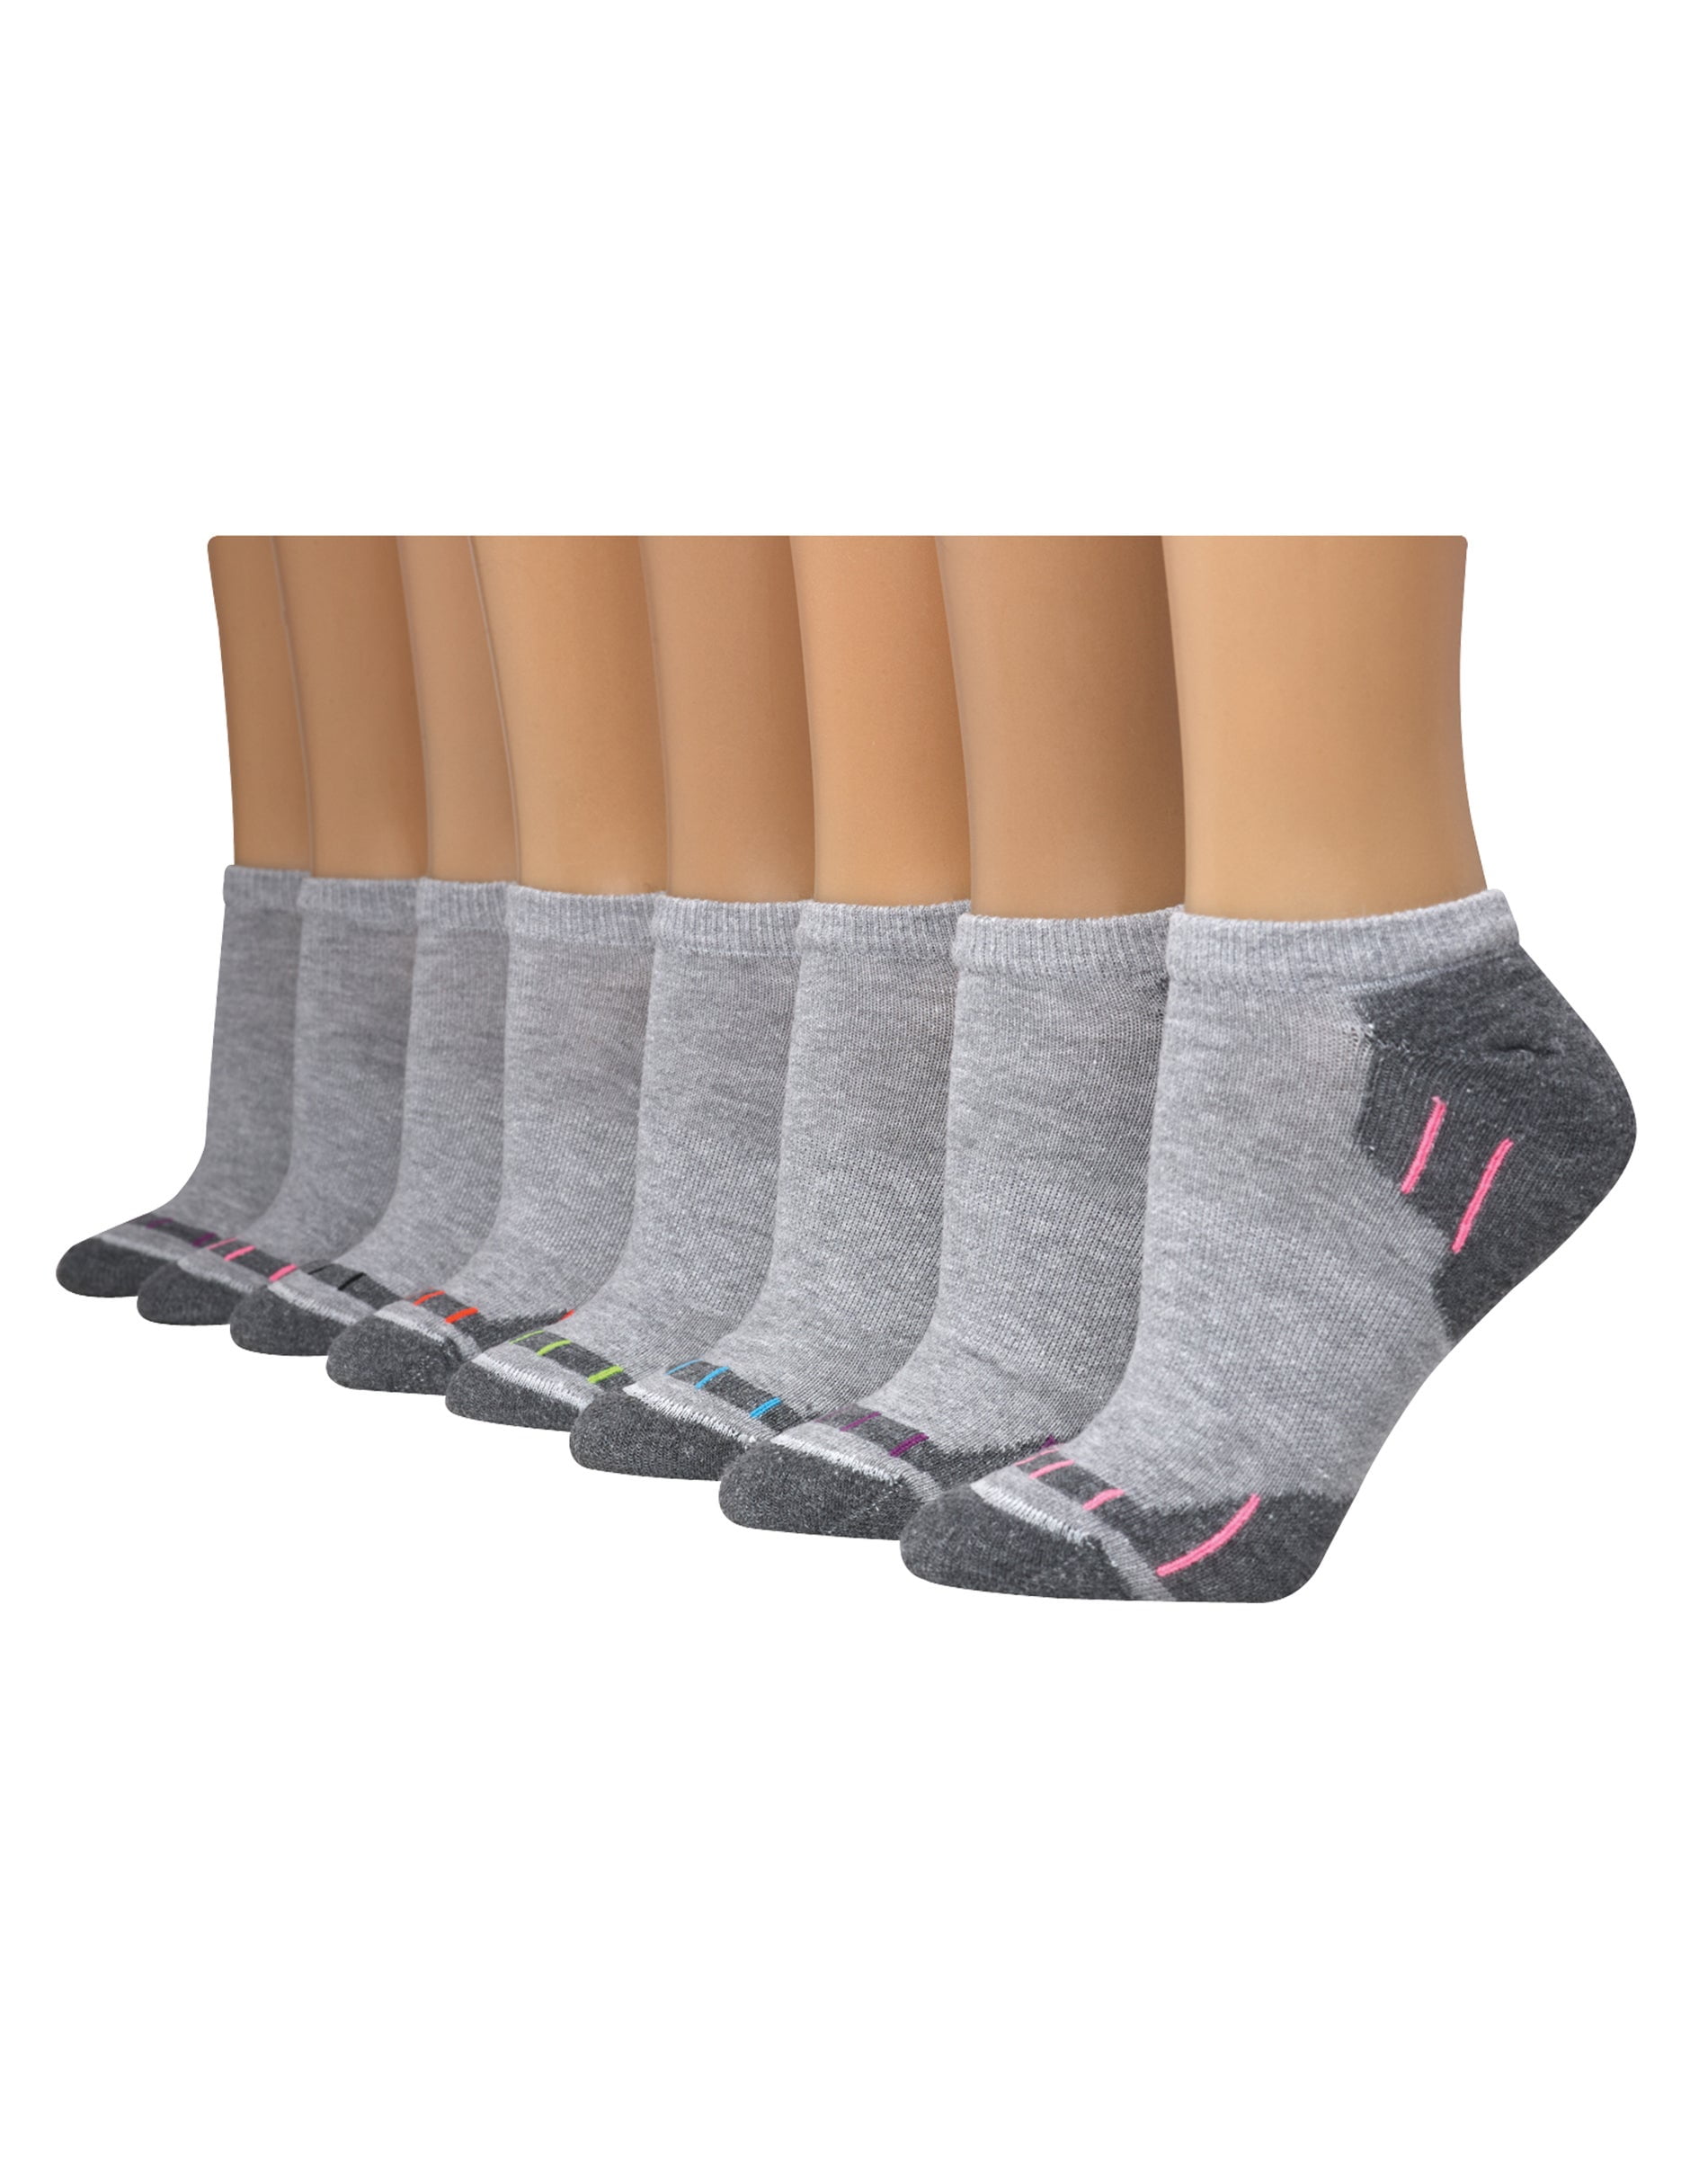 Hanes Comfort Fit Women's No-Show Socks, 6-Pairs Assorted Grey 5-9